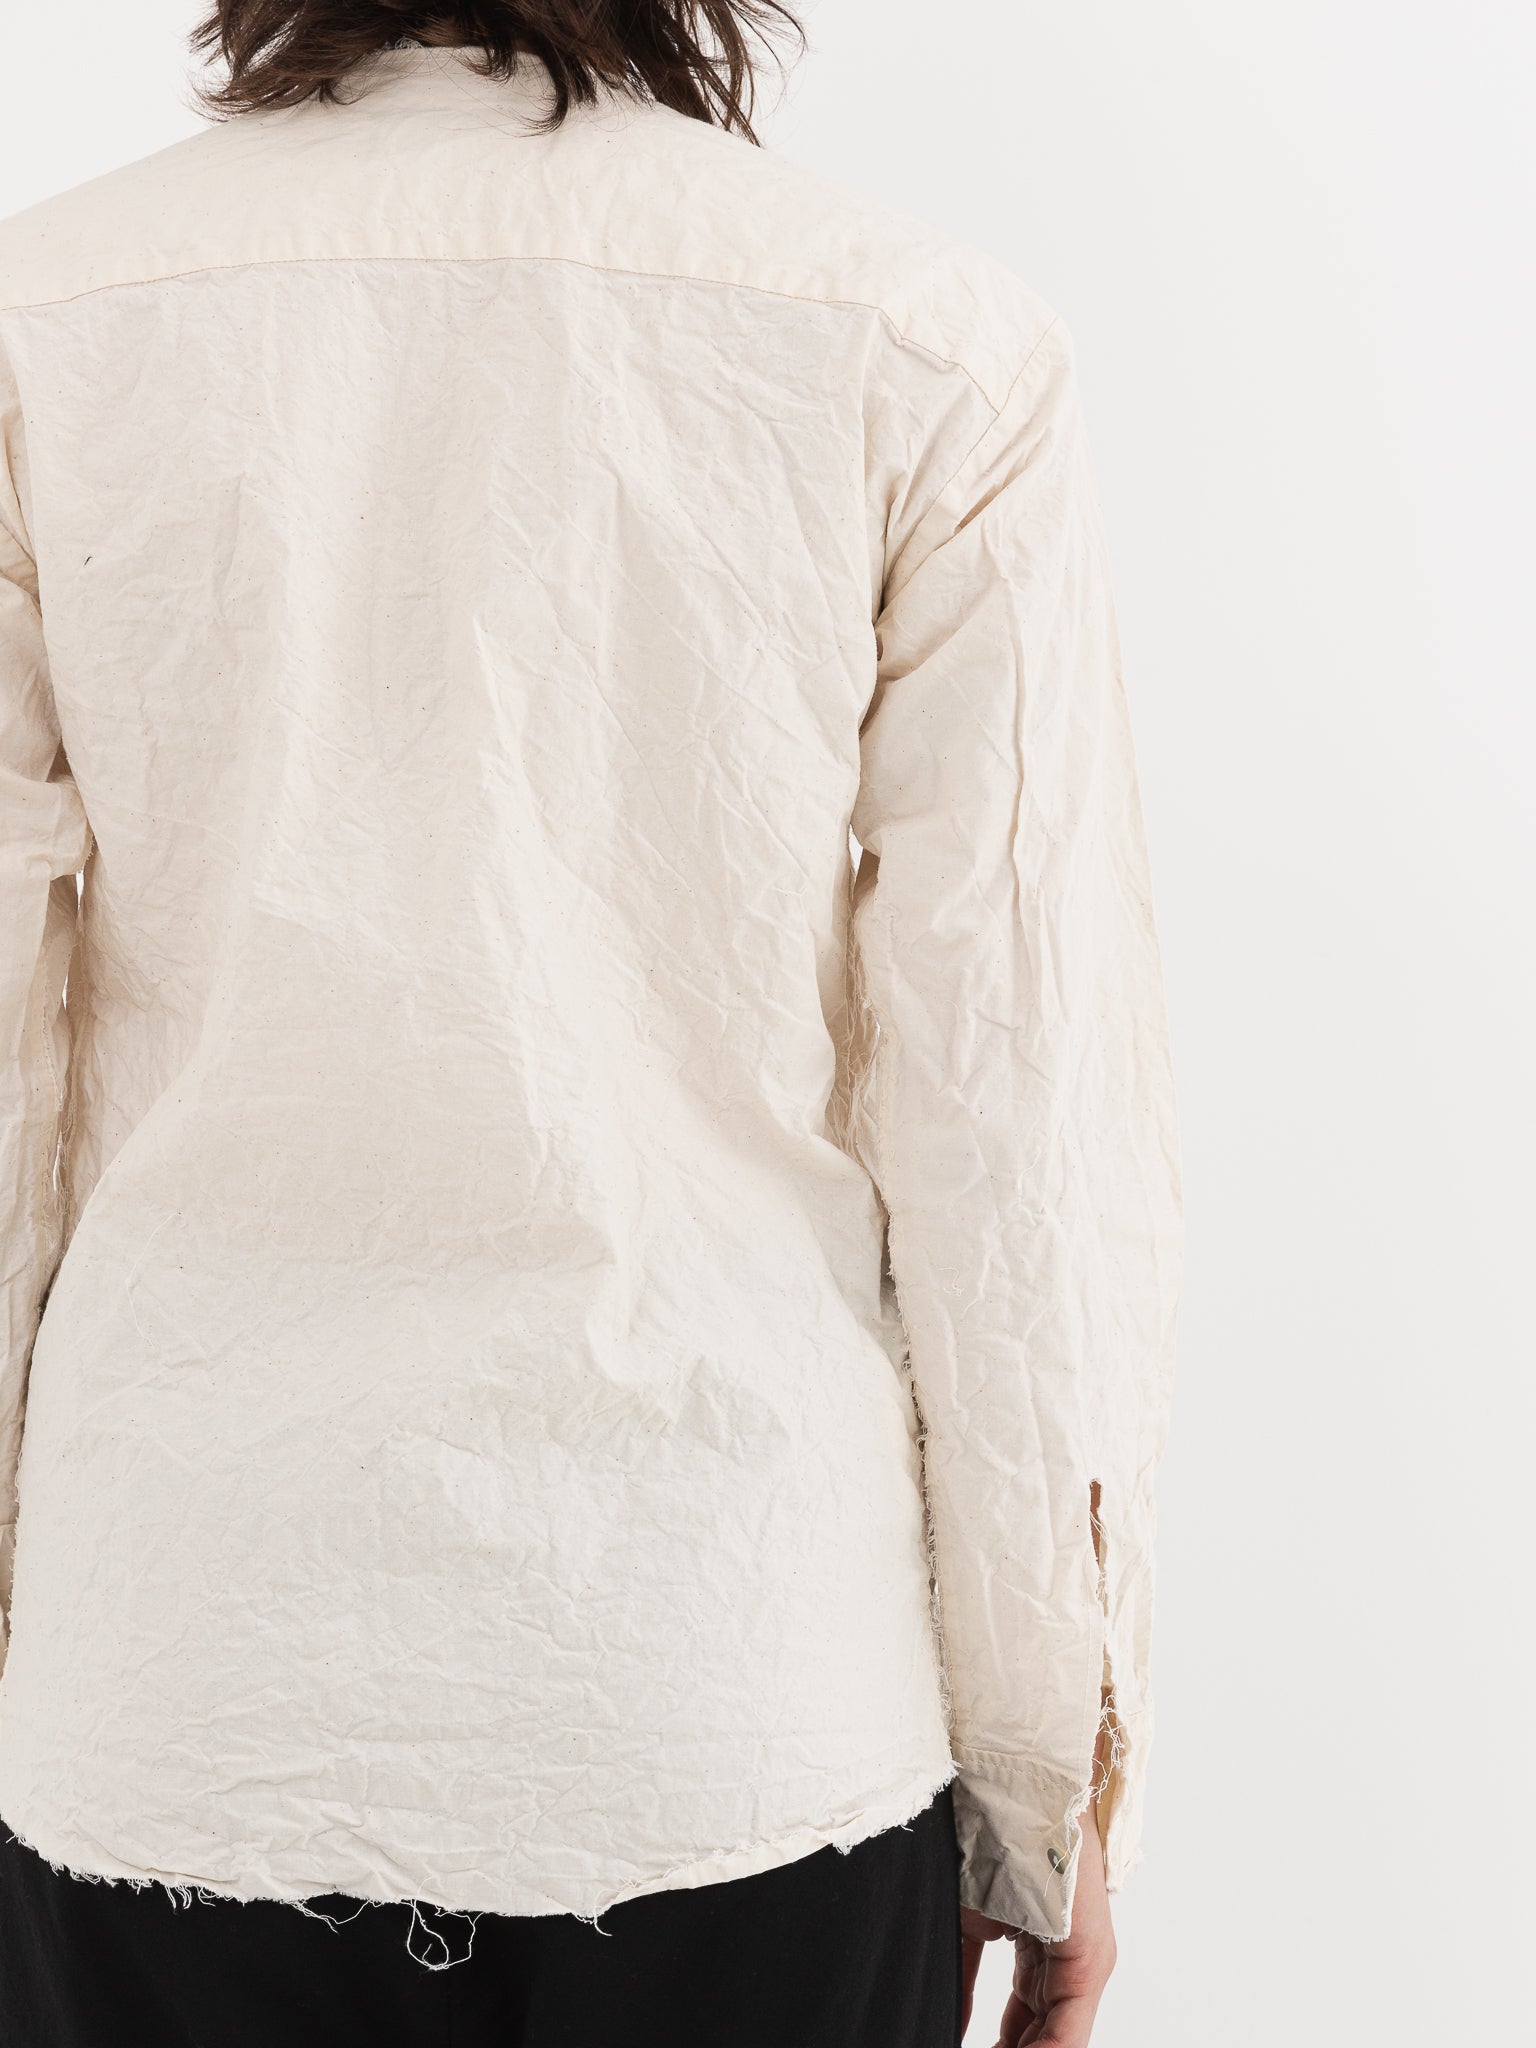 Elena Dawson No Collar Shirt in Cream - Worthwhile, Inc.